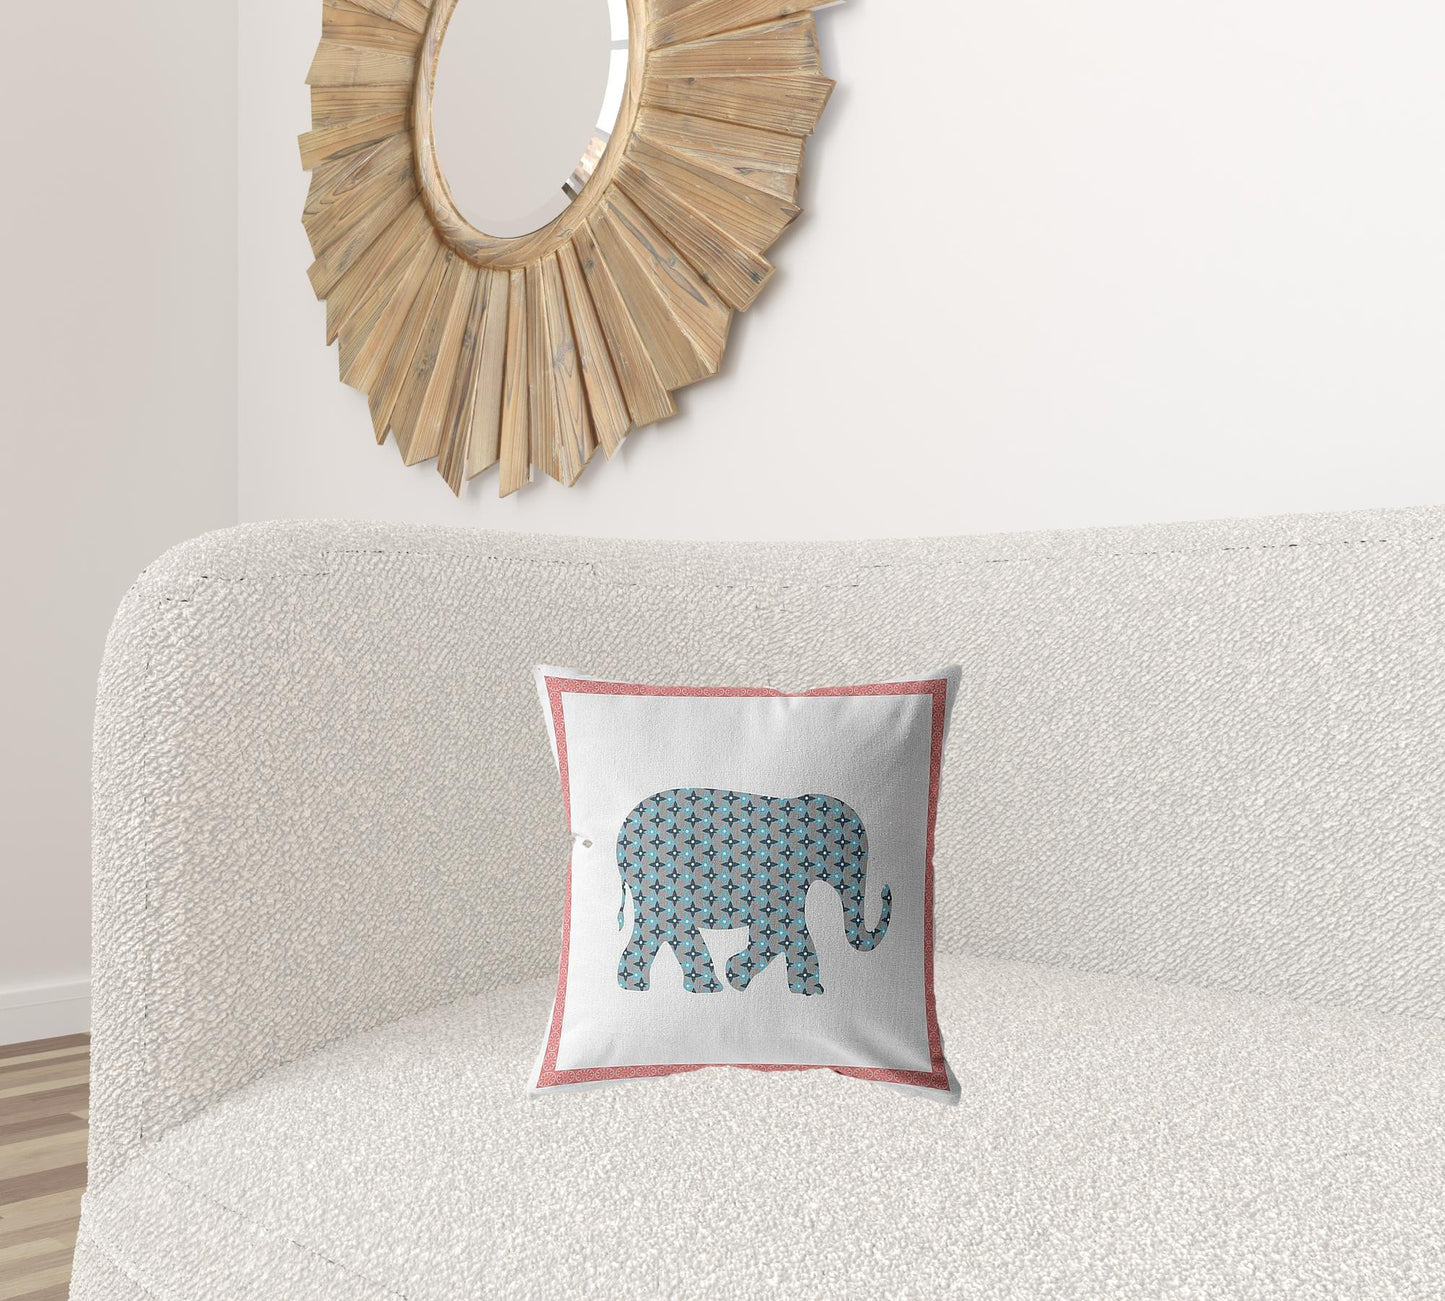 16” Blue Pink Elephant Zippered Suede Throw Pillow